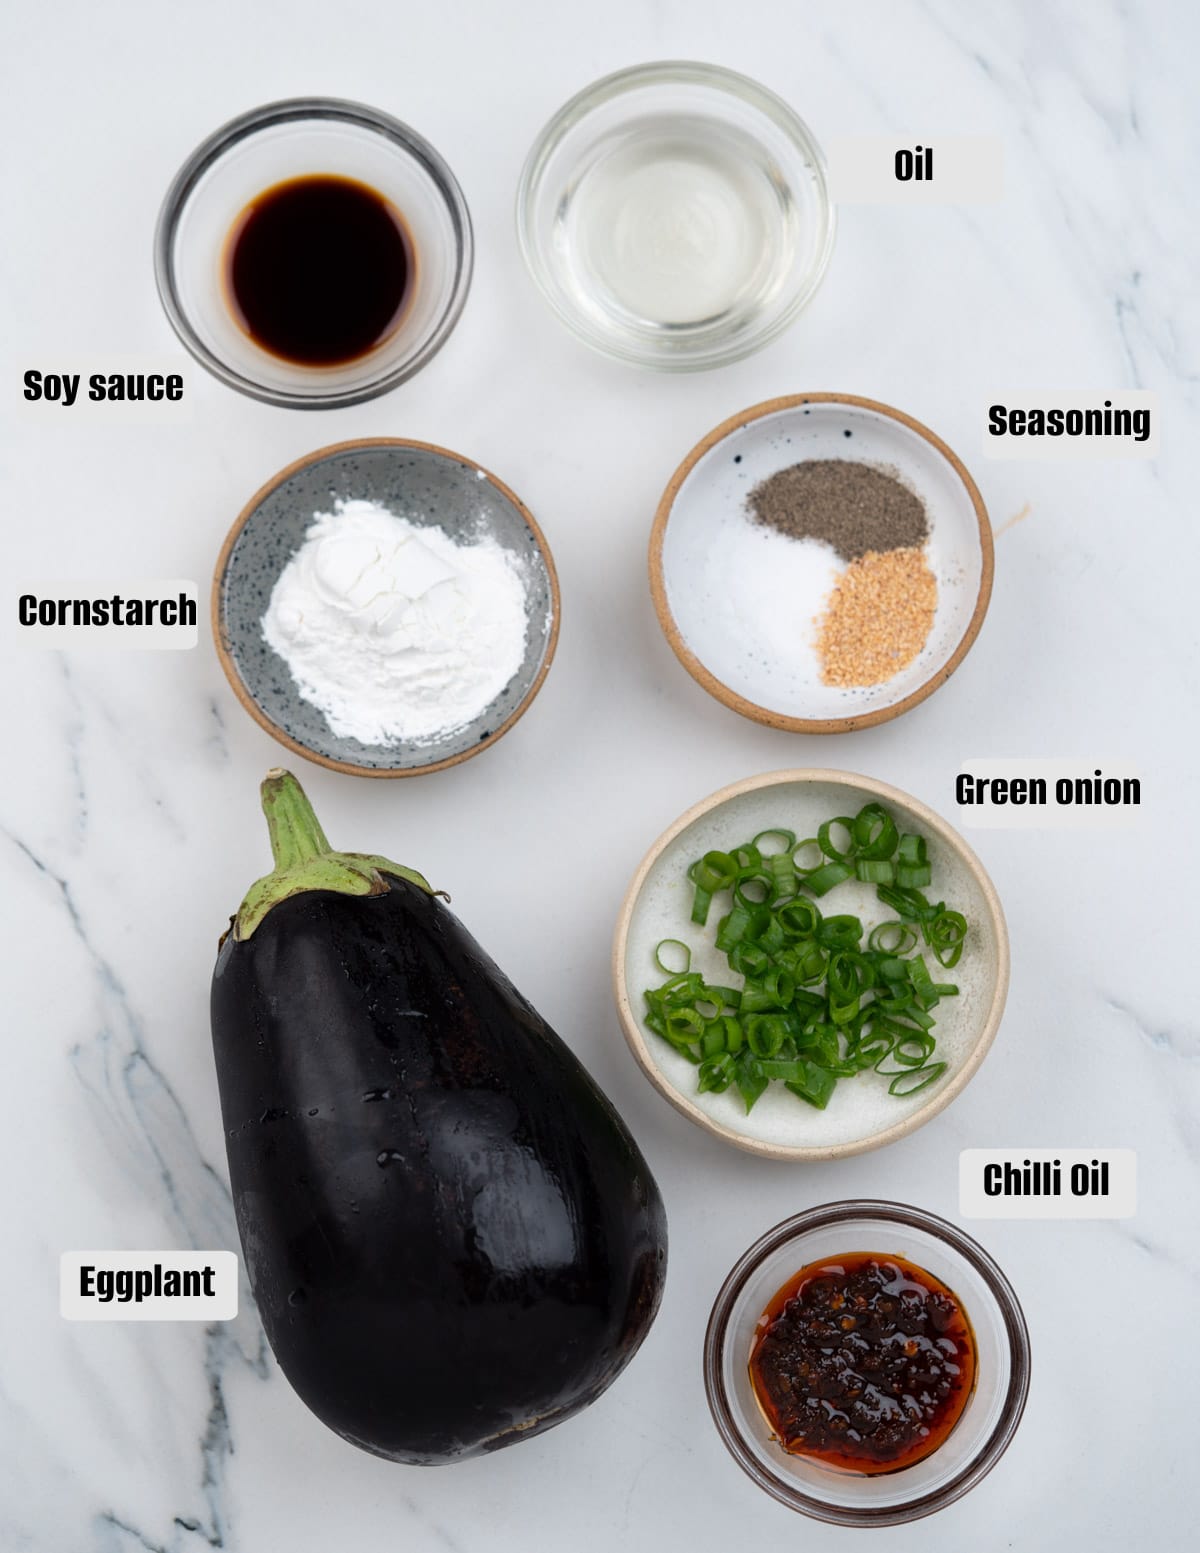 Ingredients - Eggplant, Cornstarch, garlic powder, salt, pepper, oil, saoy sauce, Chilli Oil crisp